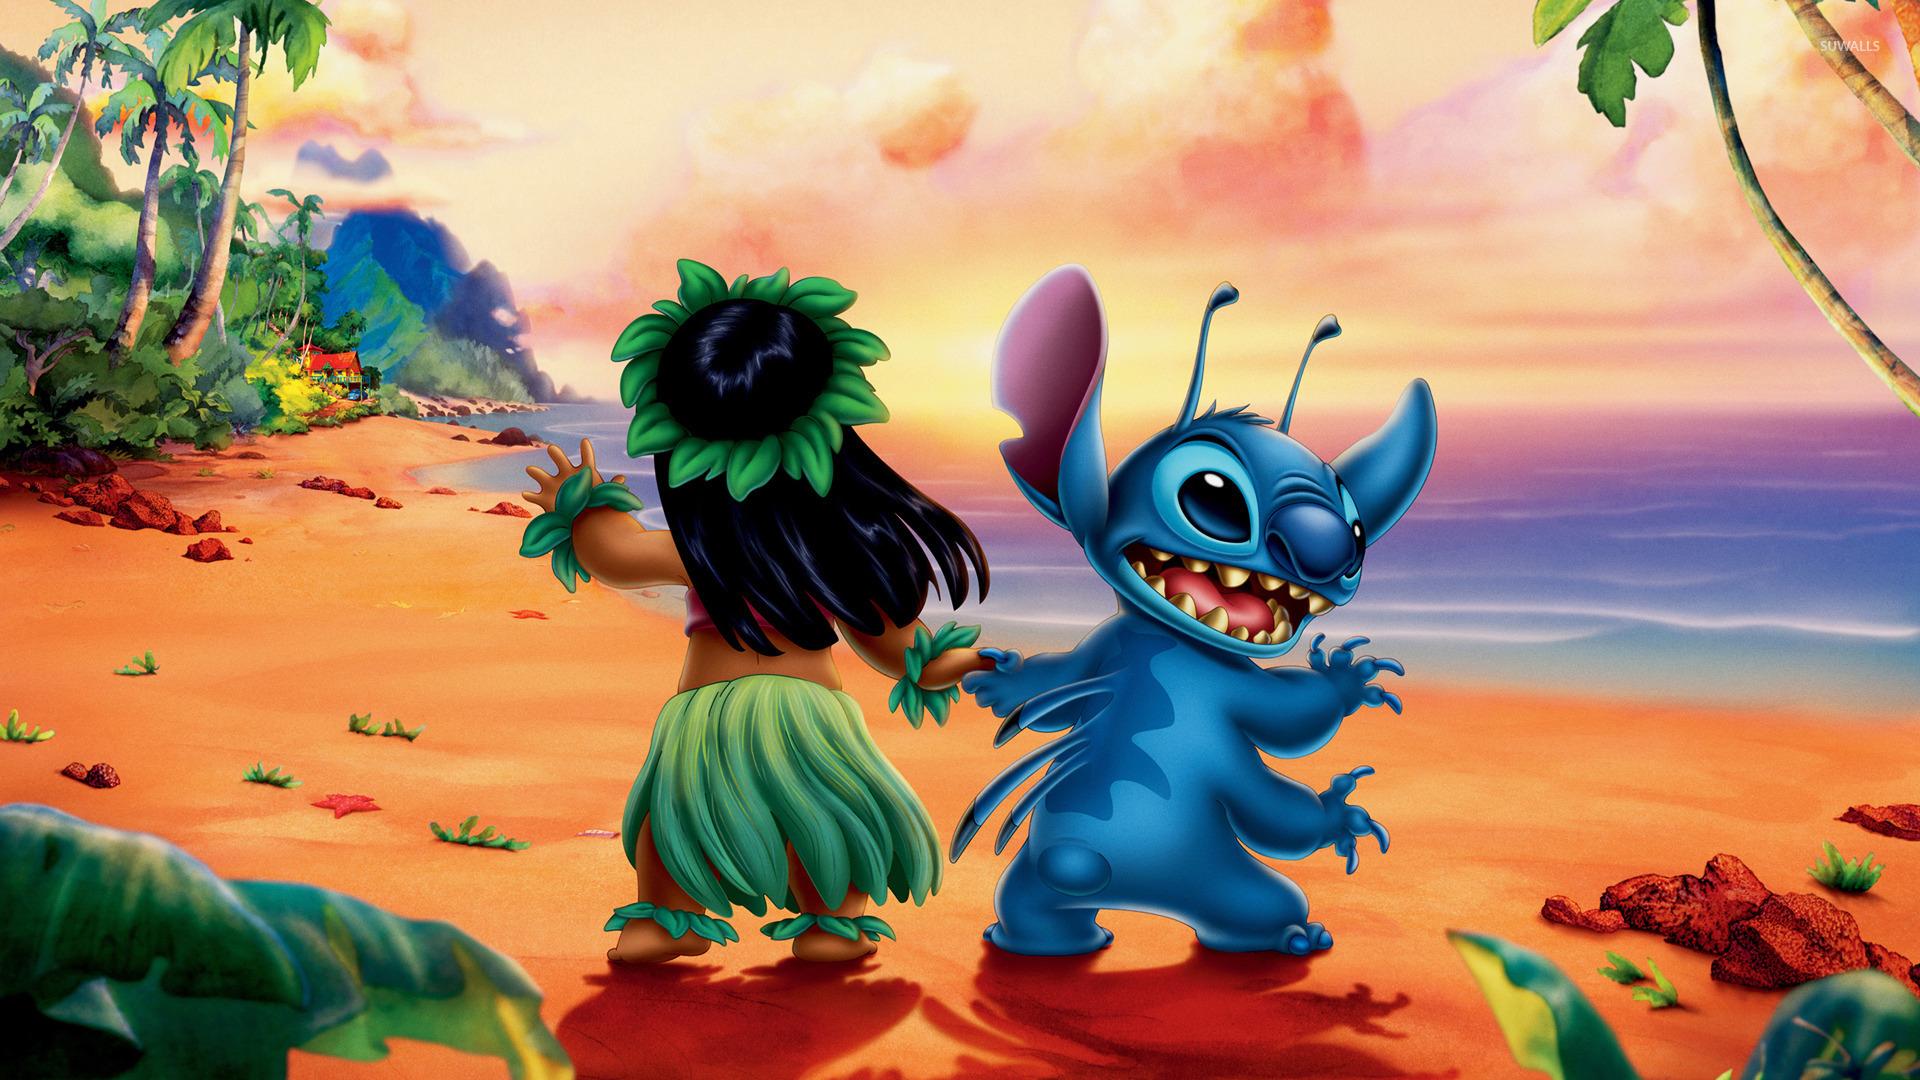 Lilo & Stitch Wallpaper and Background Image